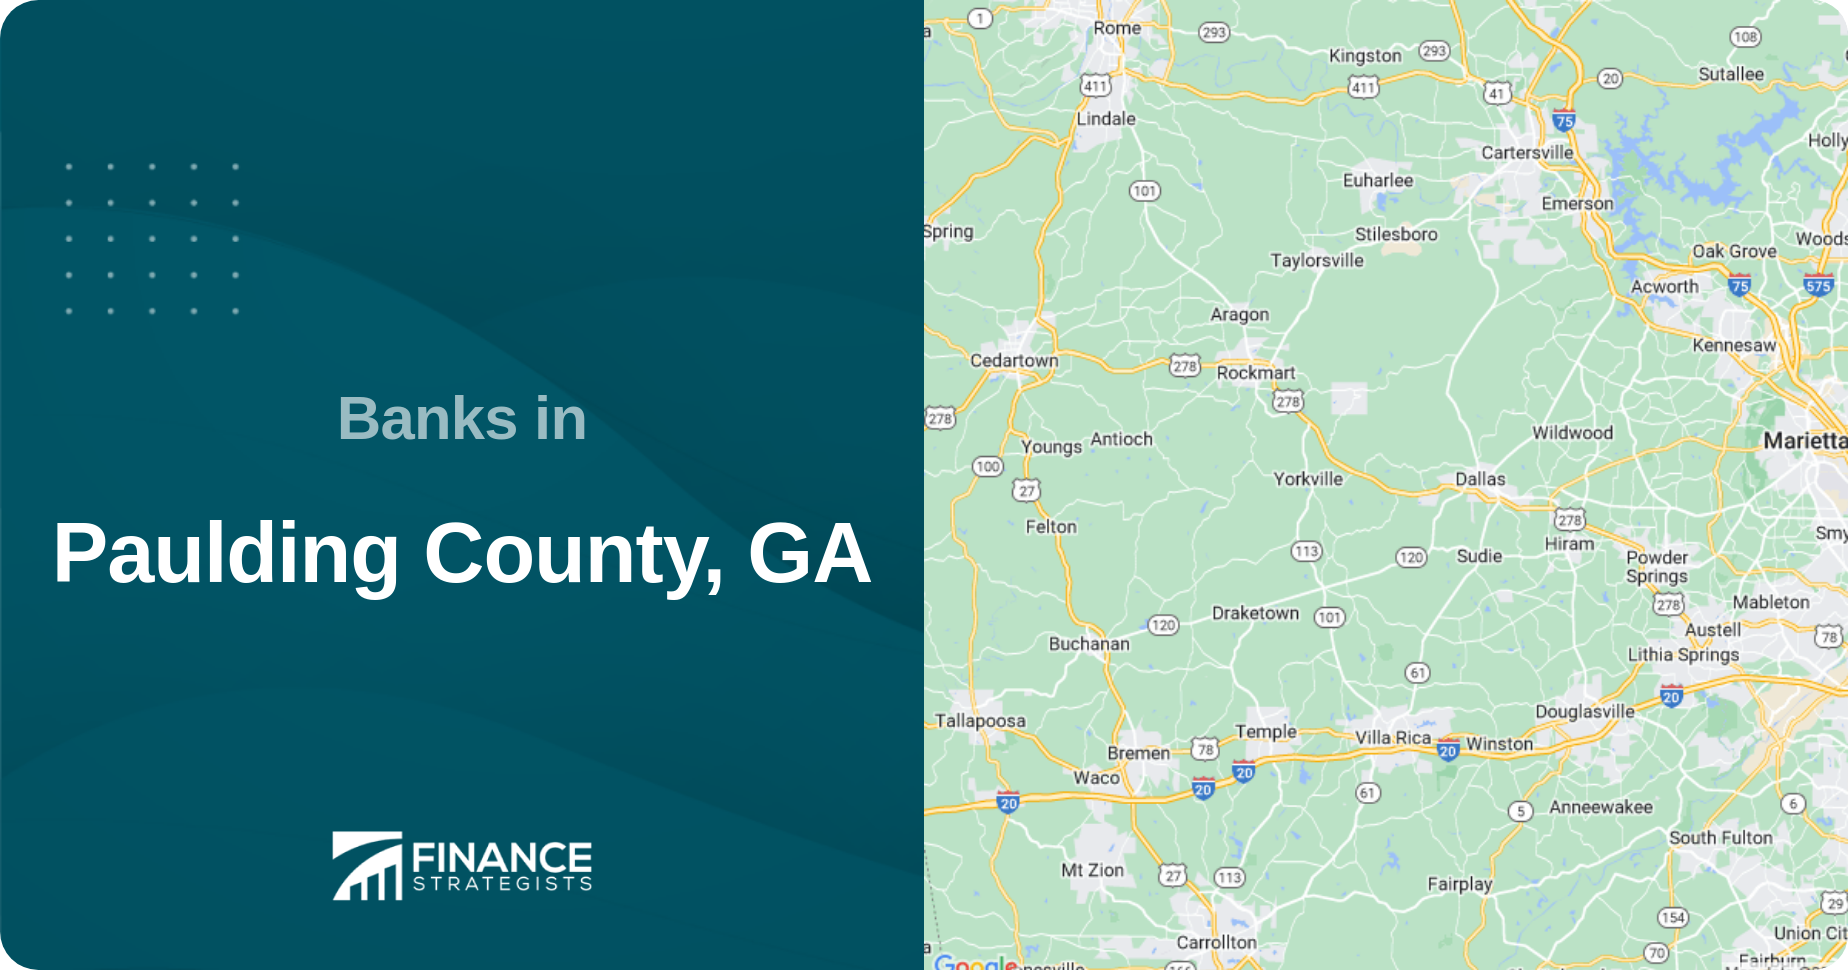 Banks in Paulding County, GA